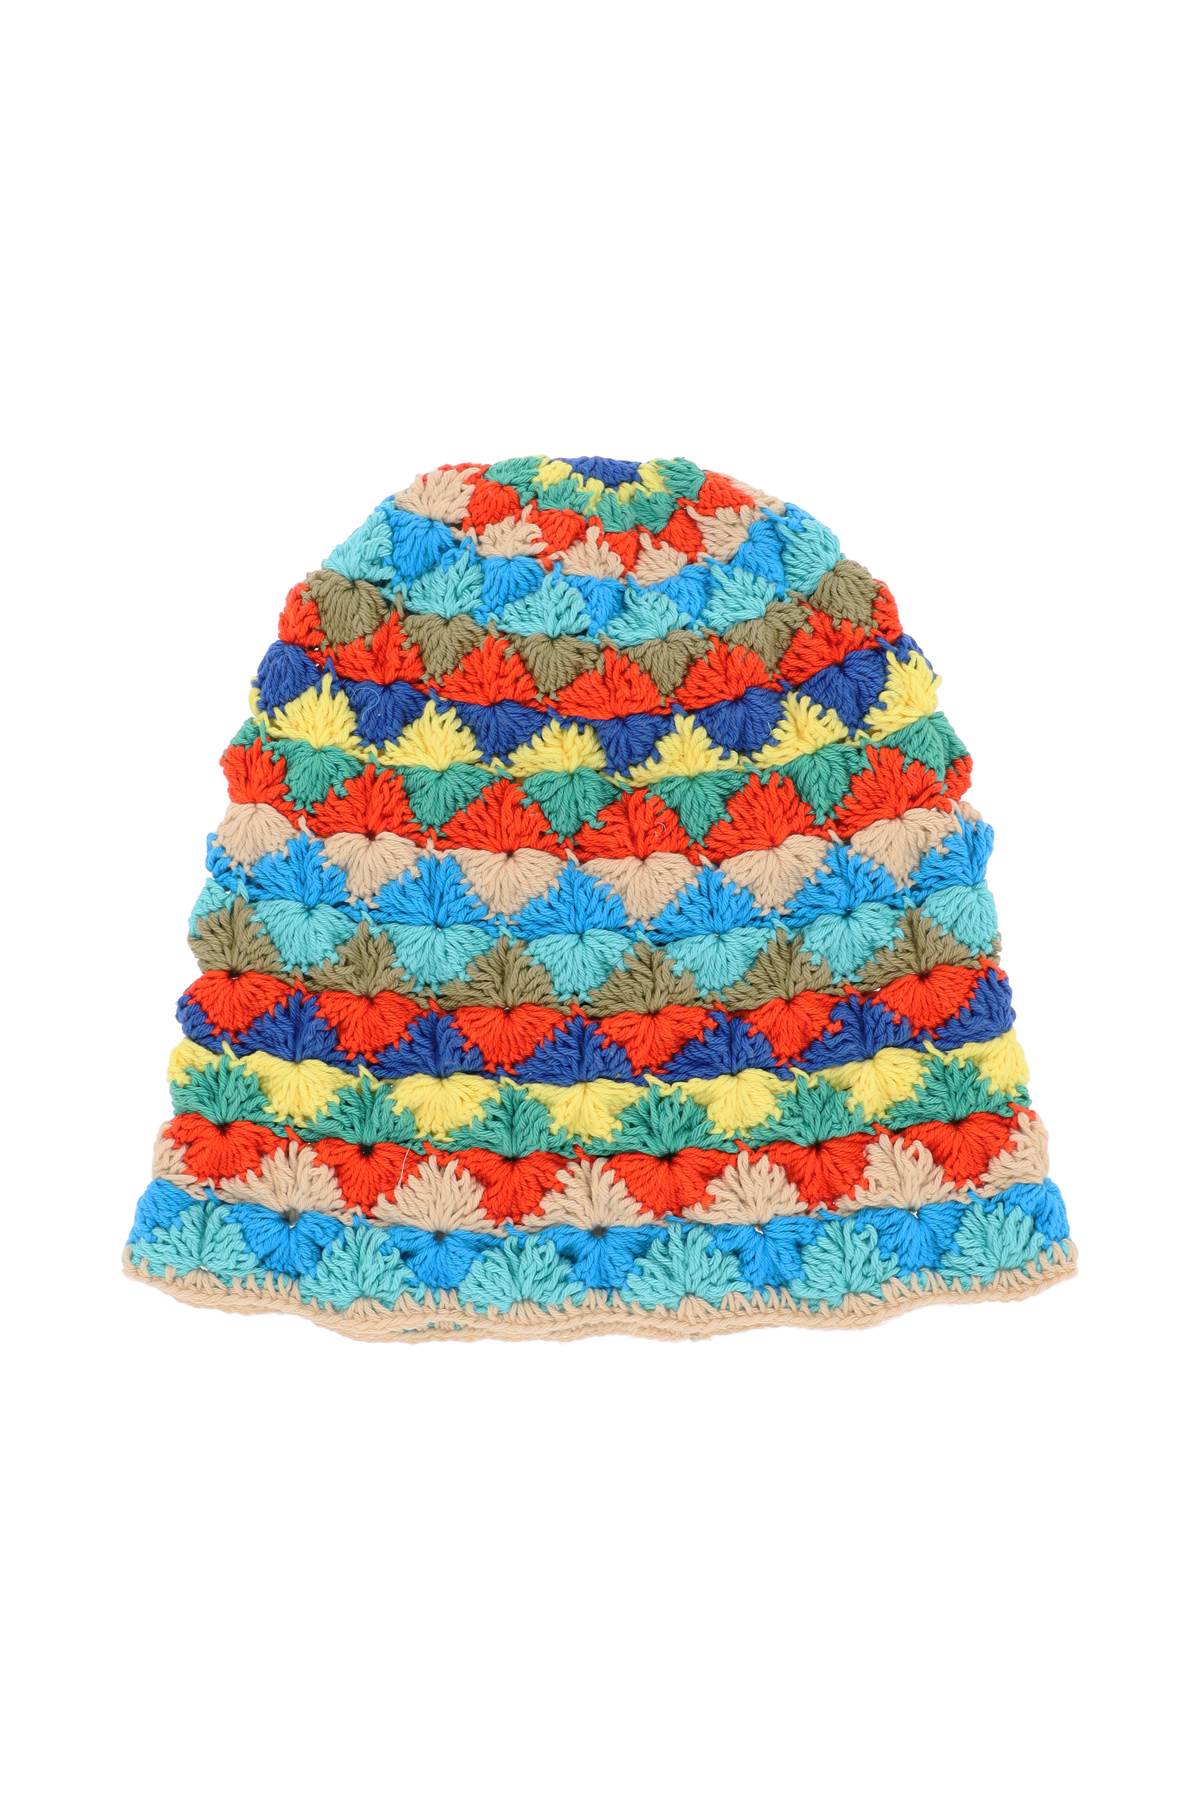 Crochet over The Rainbow Cloche